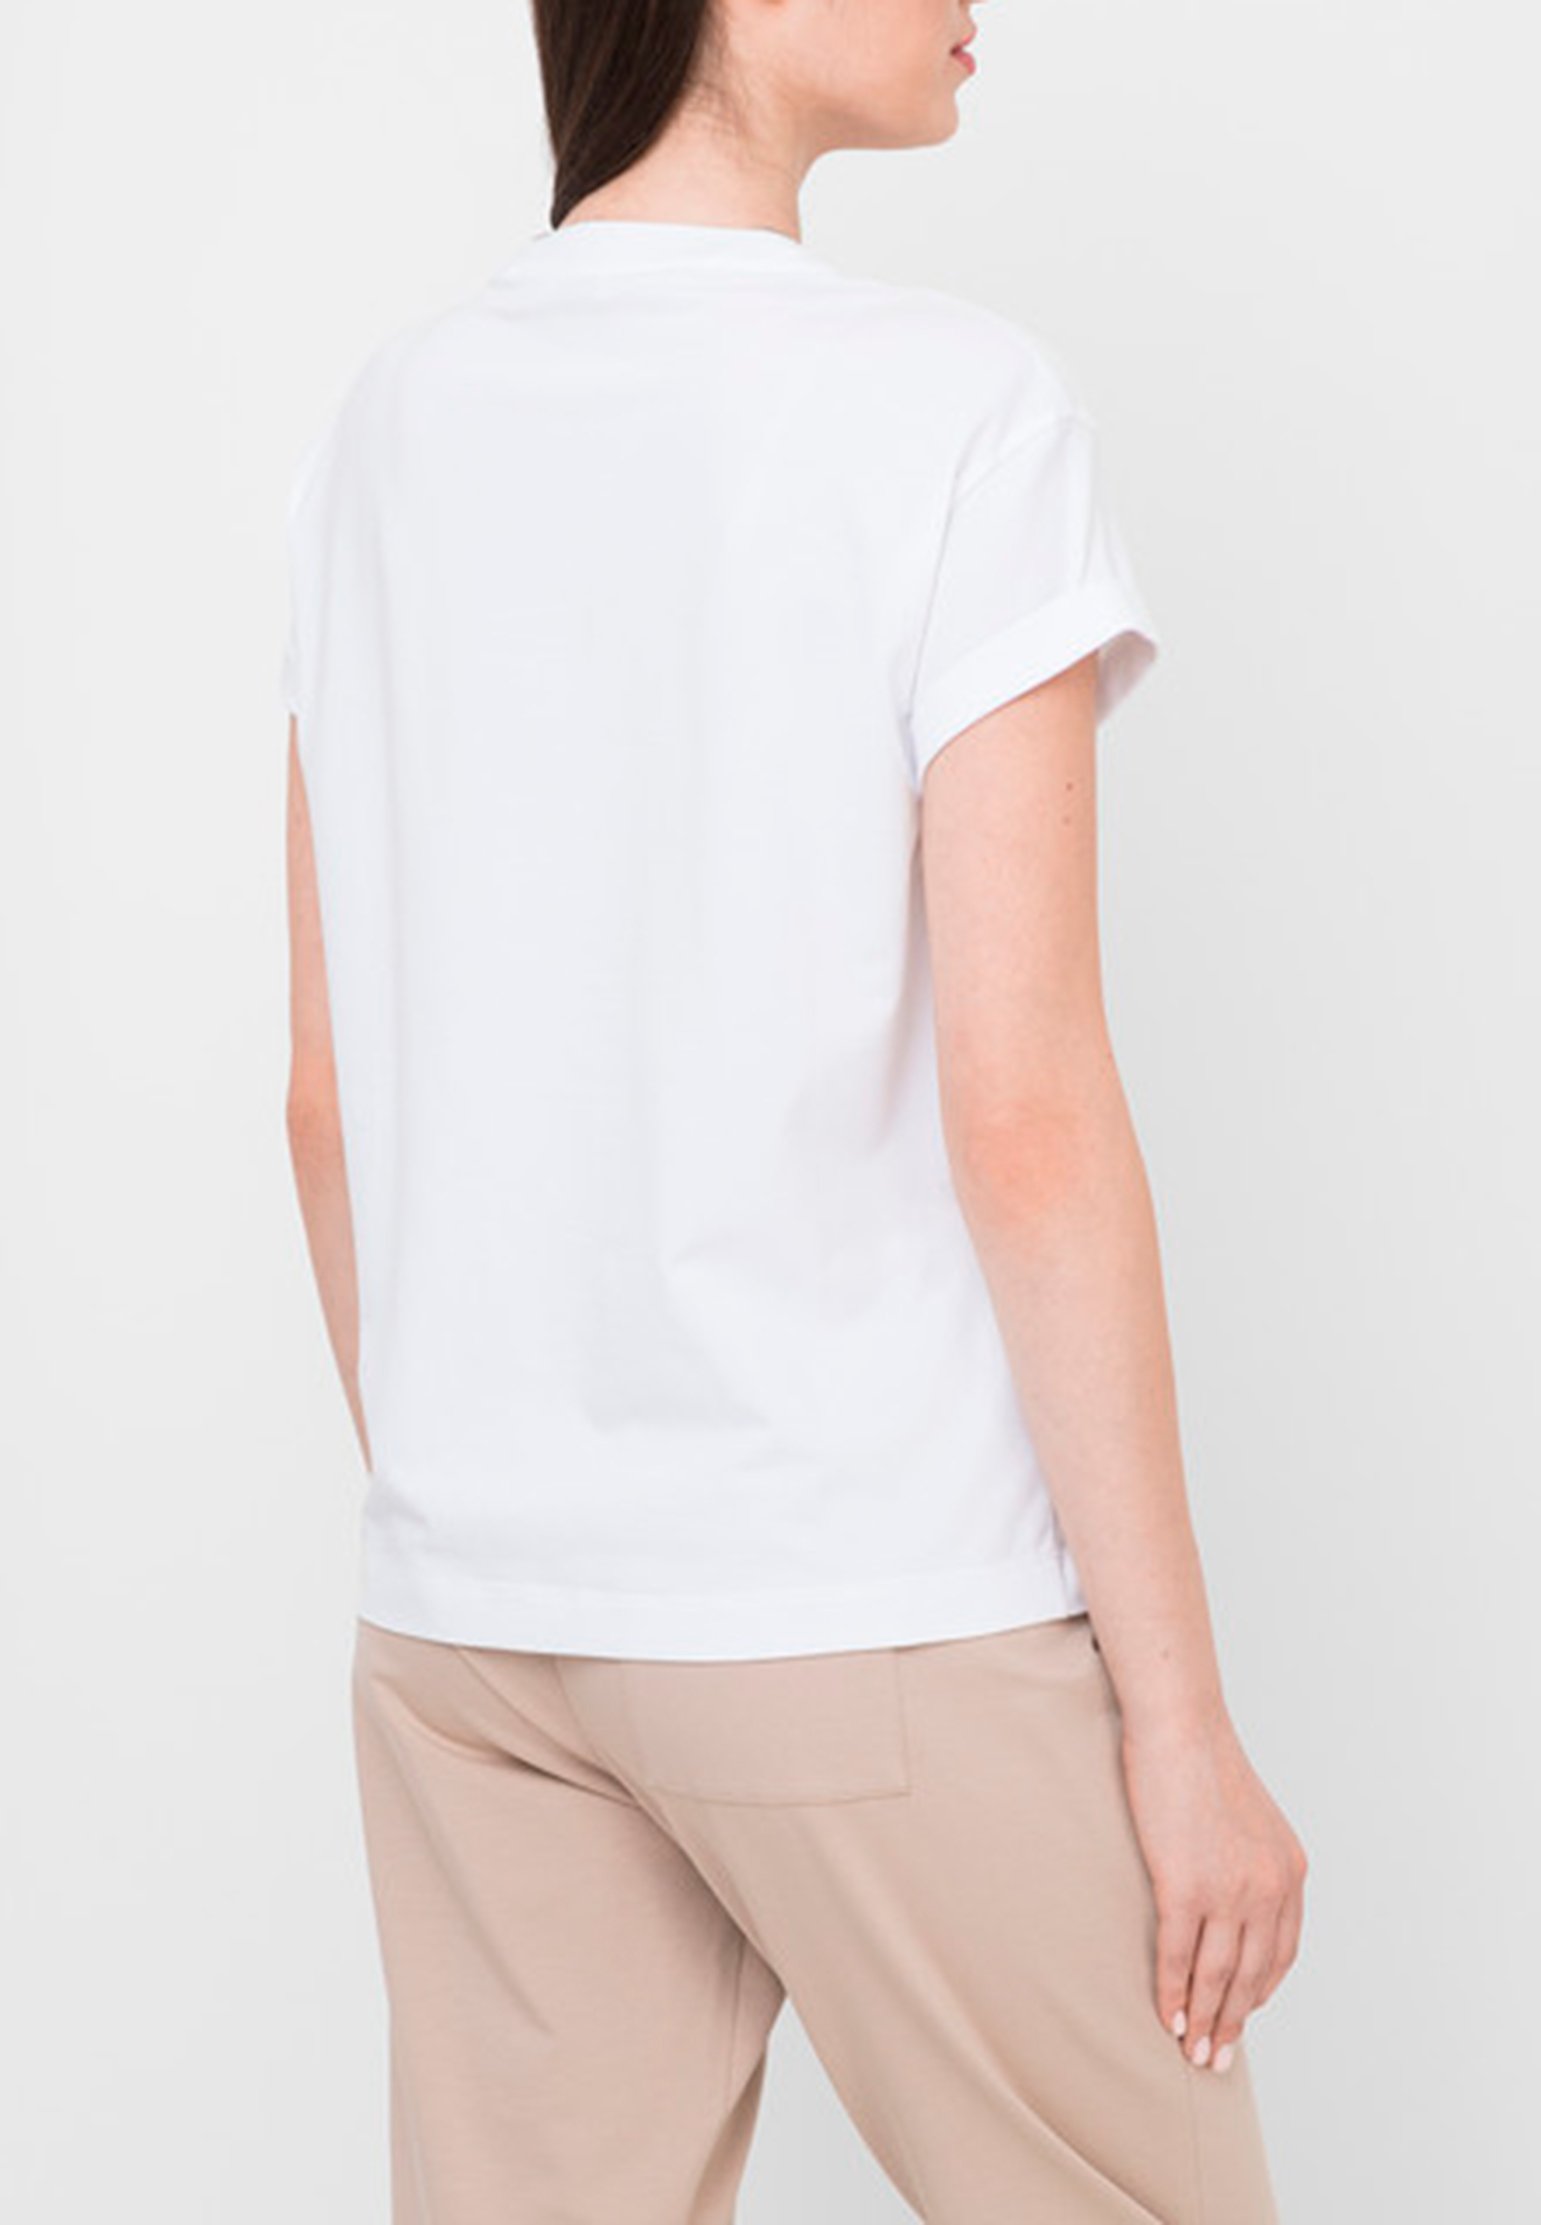 T-Shirt BRUNELLO CUCINELLI Color: white (Code: 267) in online store Allure